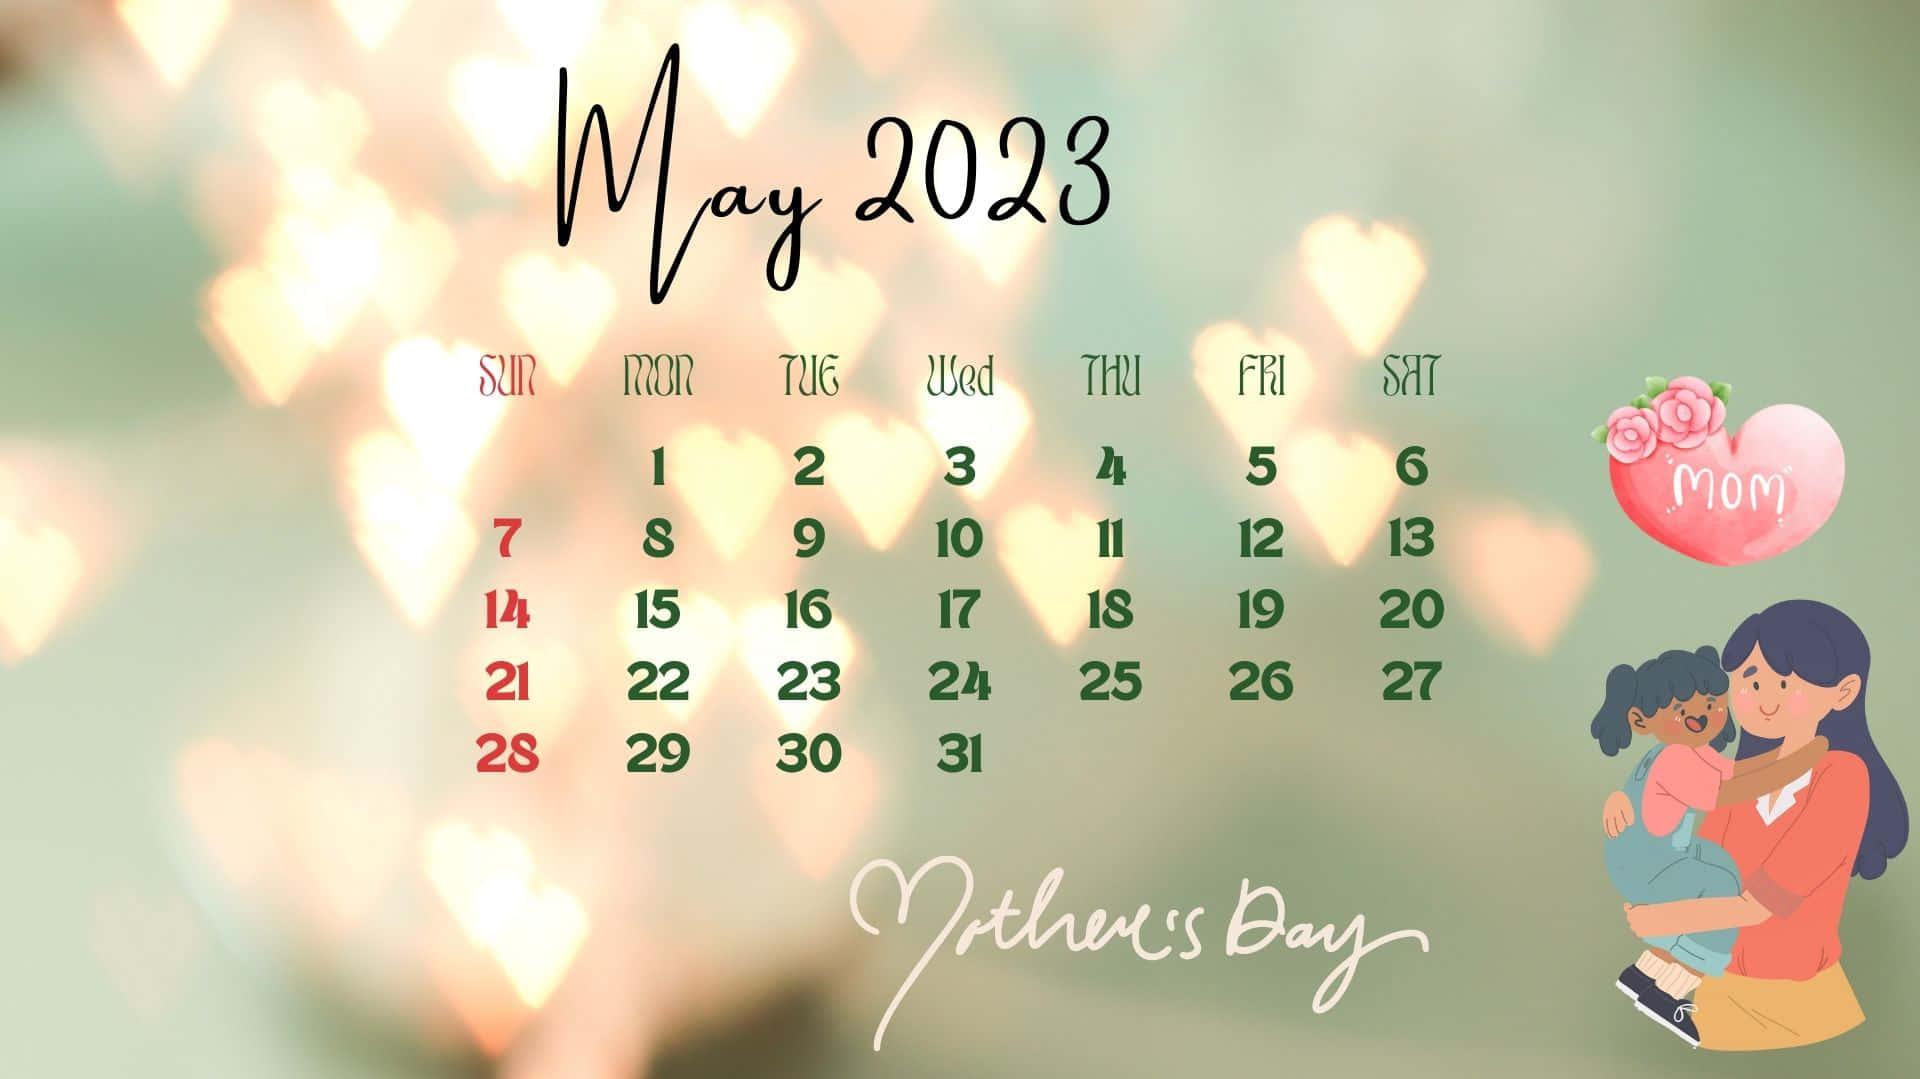 Free May 2023 Calendar Wallpaper Downloads [100] May 2023